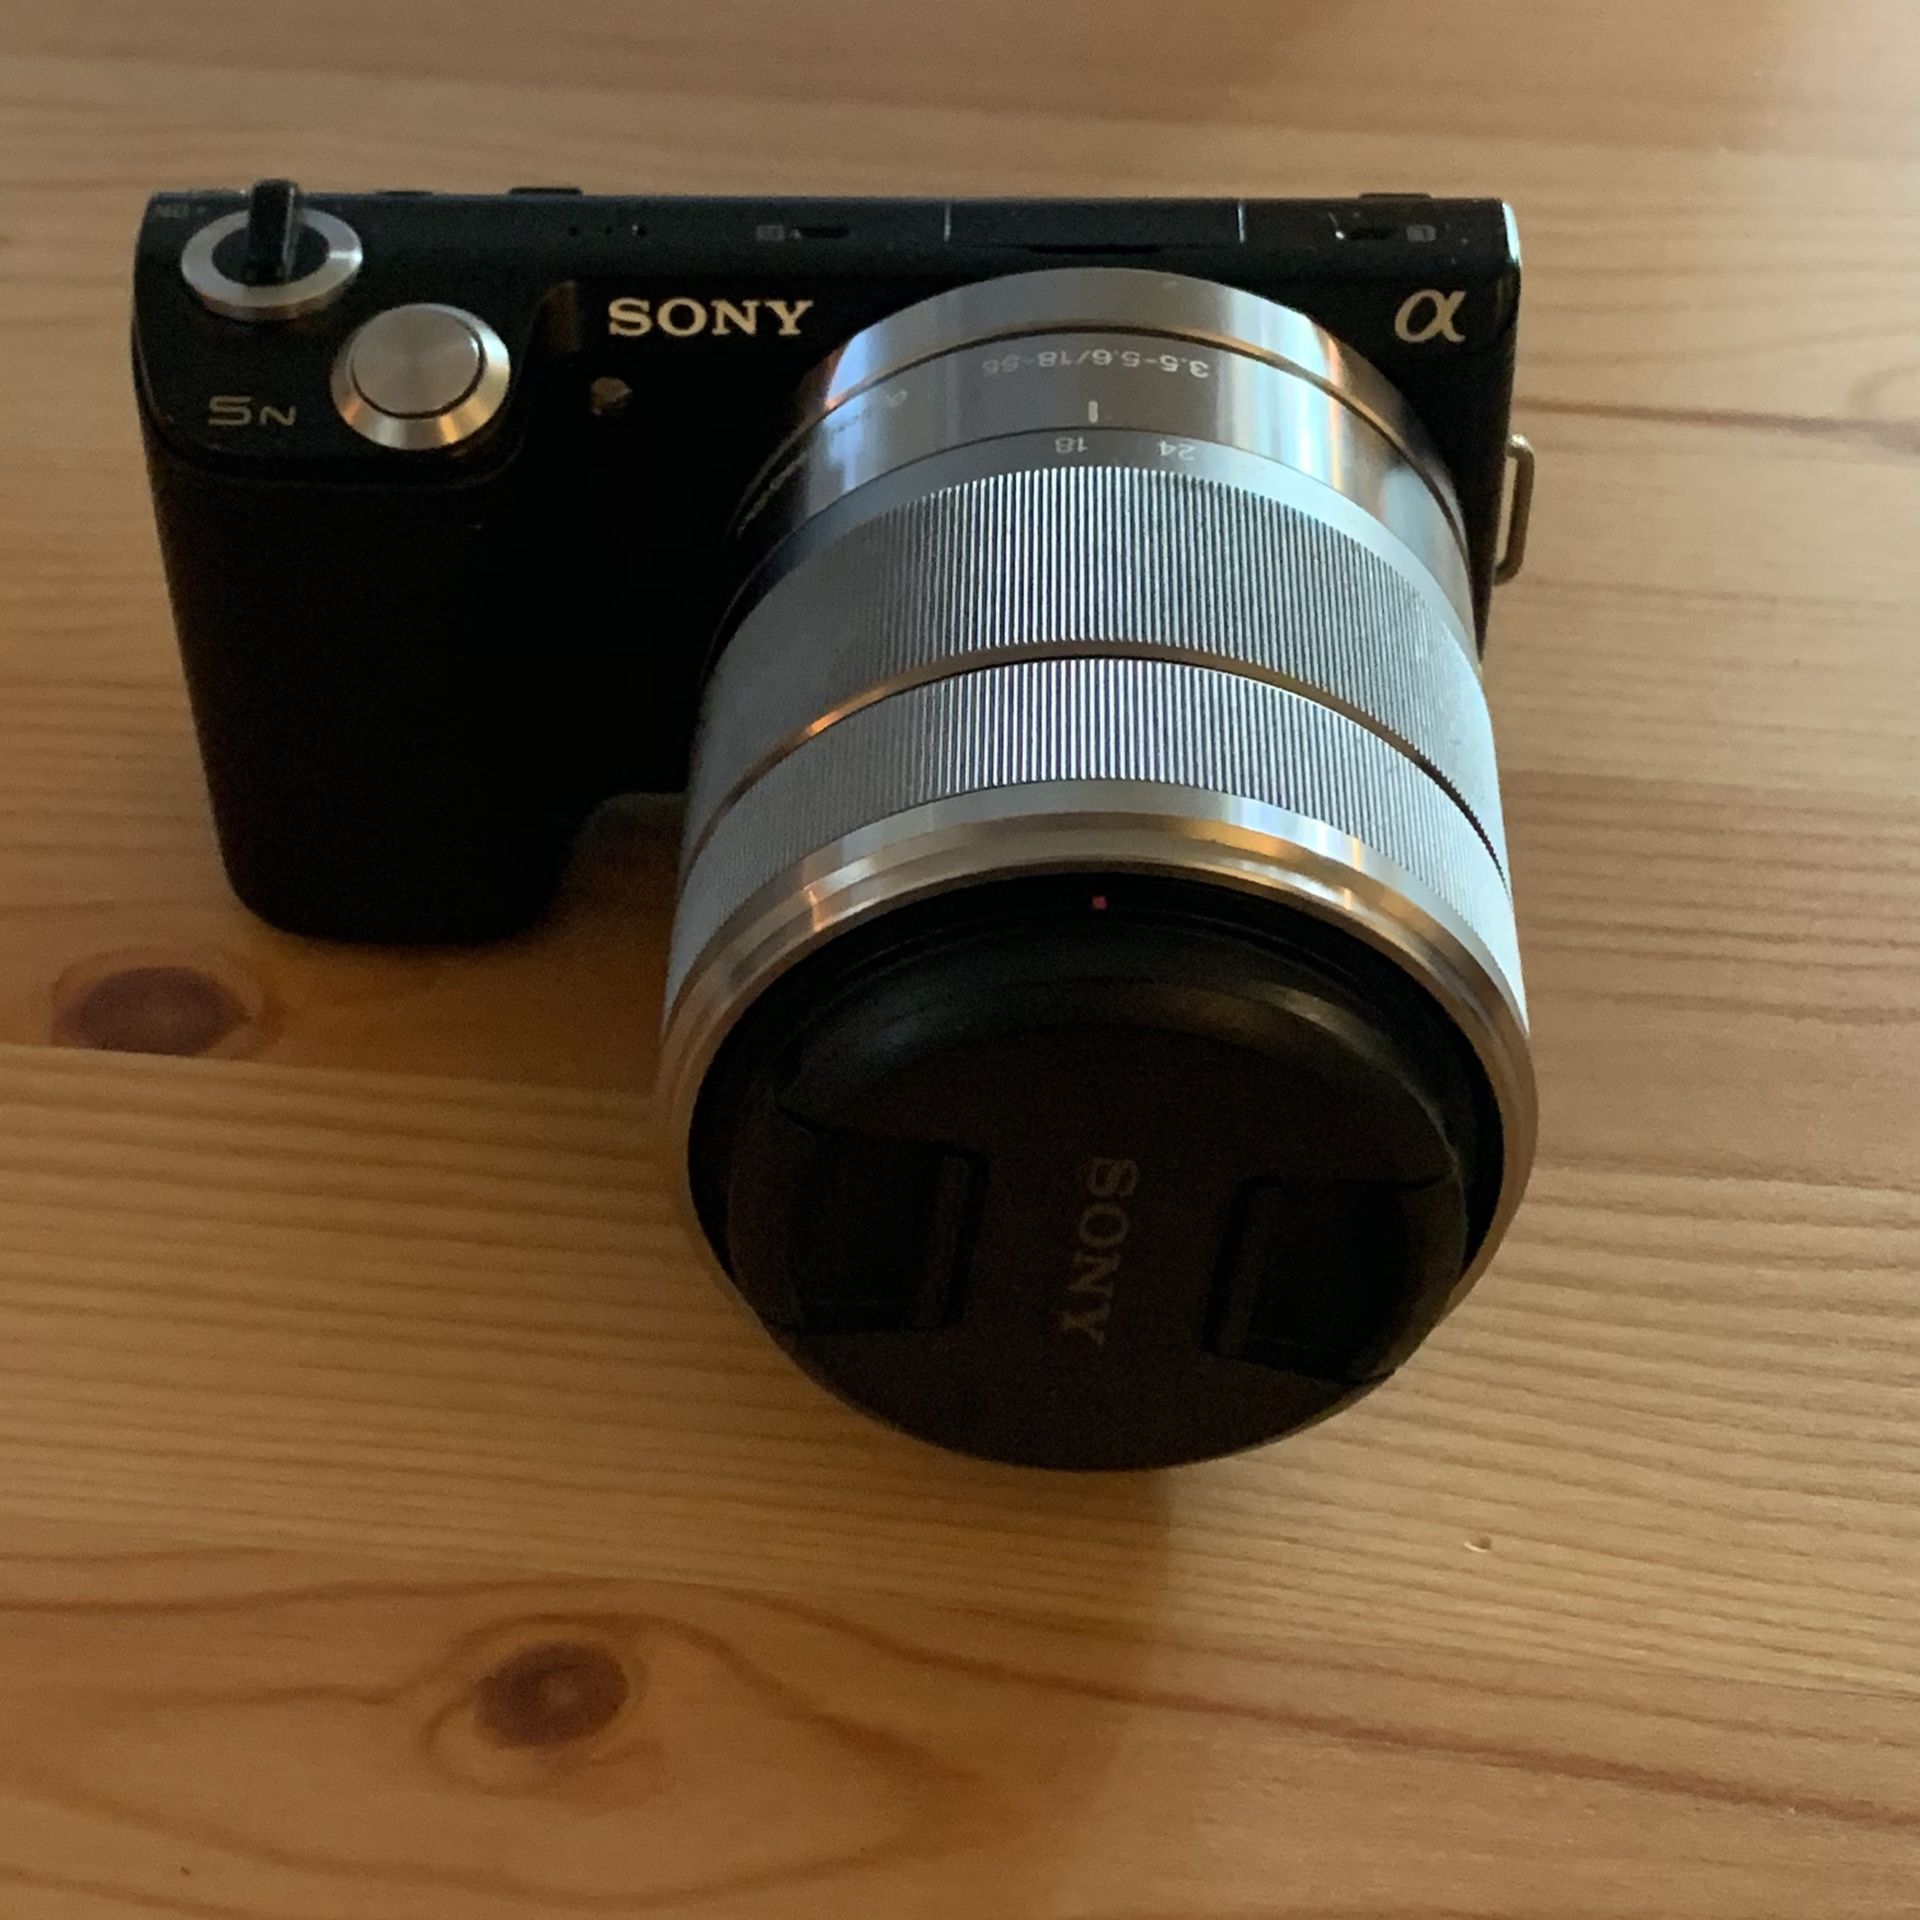 Sony Nex 5n mirrorless camera